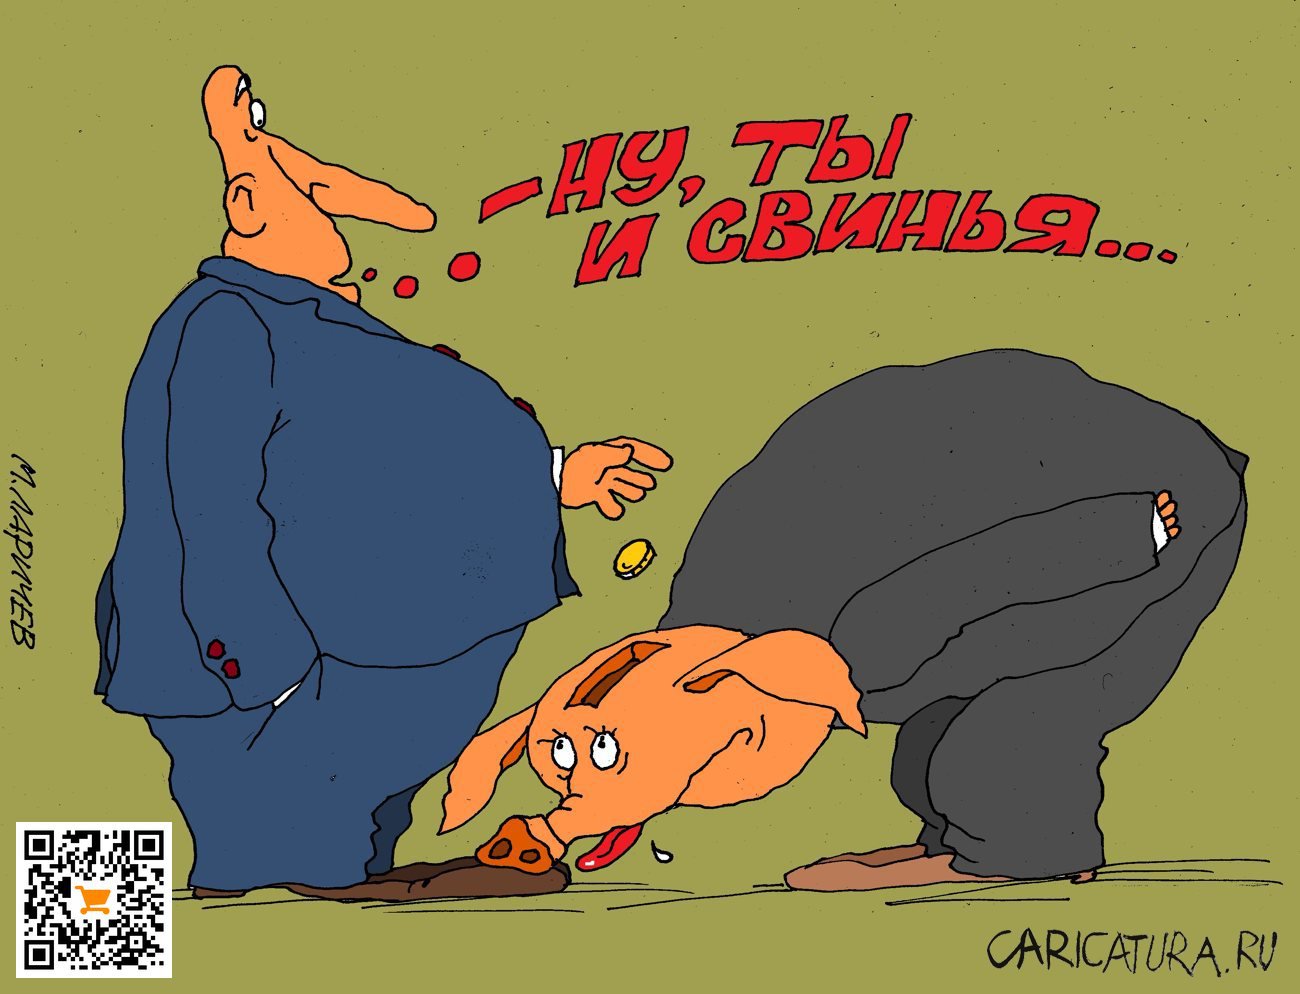 Карикатура "Денежка", Михаил Ларичев